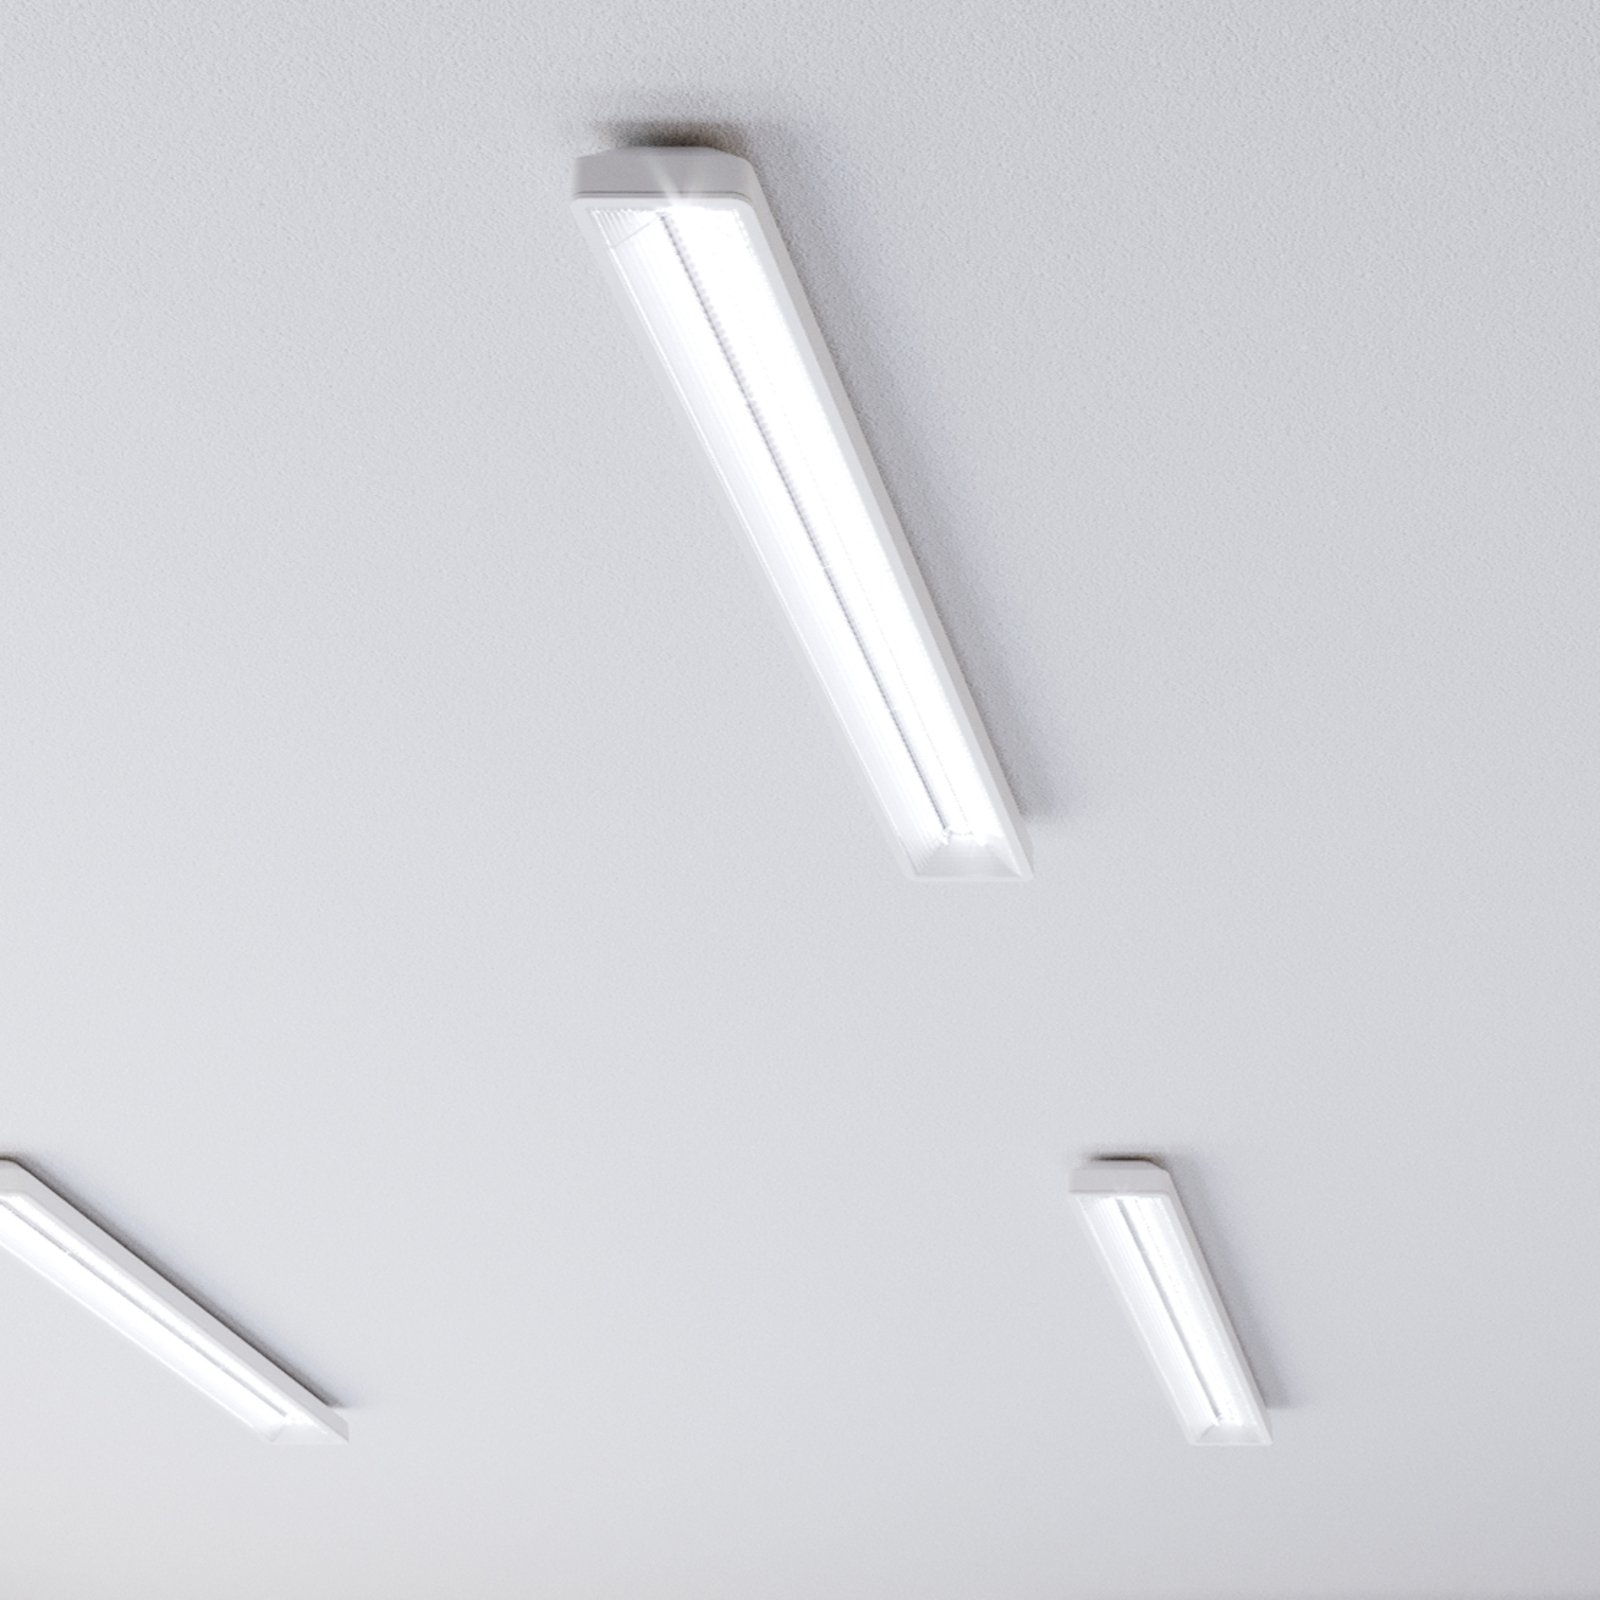 Siteco Taris LED ceiling light 123 cm EB